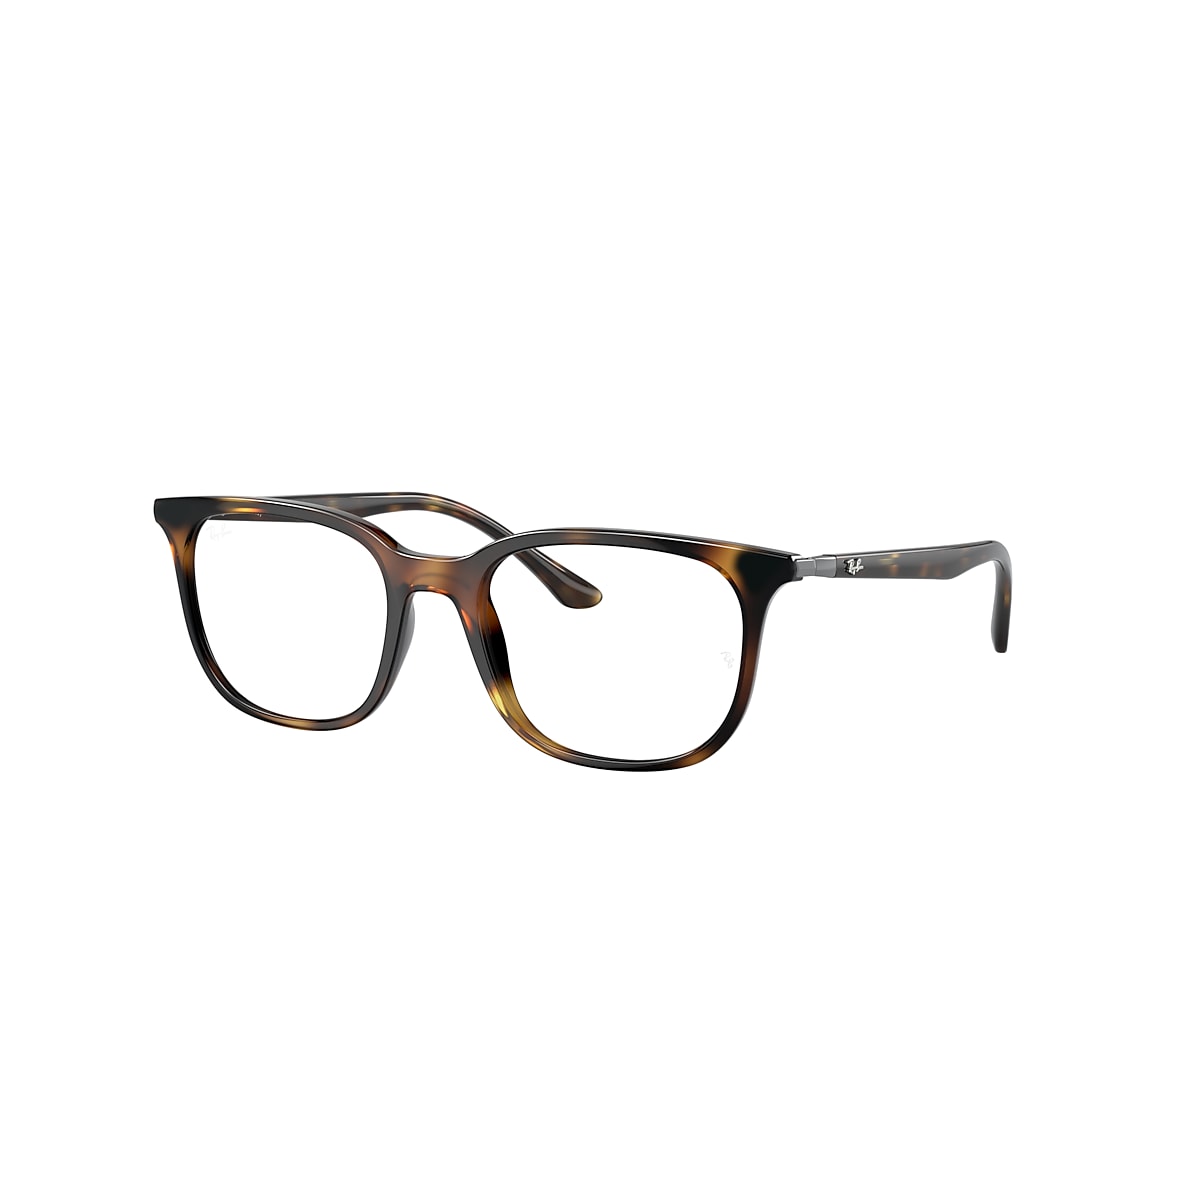 RB7211 OPTICS Eyeglasses with Havana Frame - RB7211 - Ray-Ban